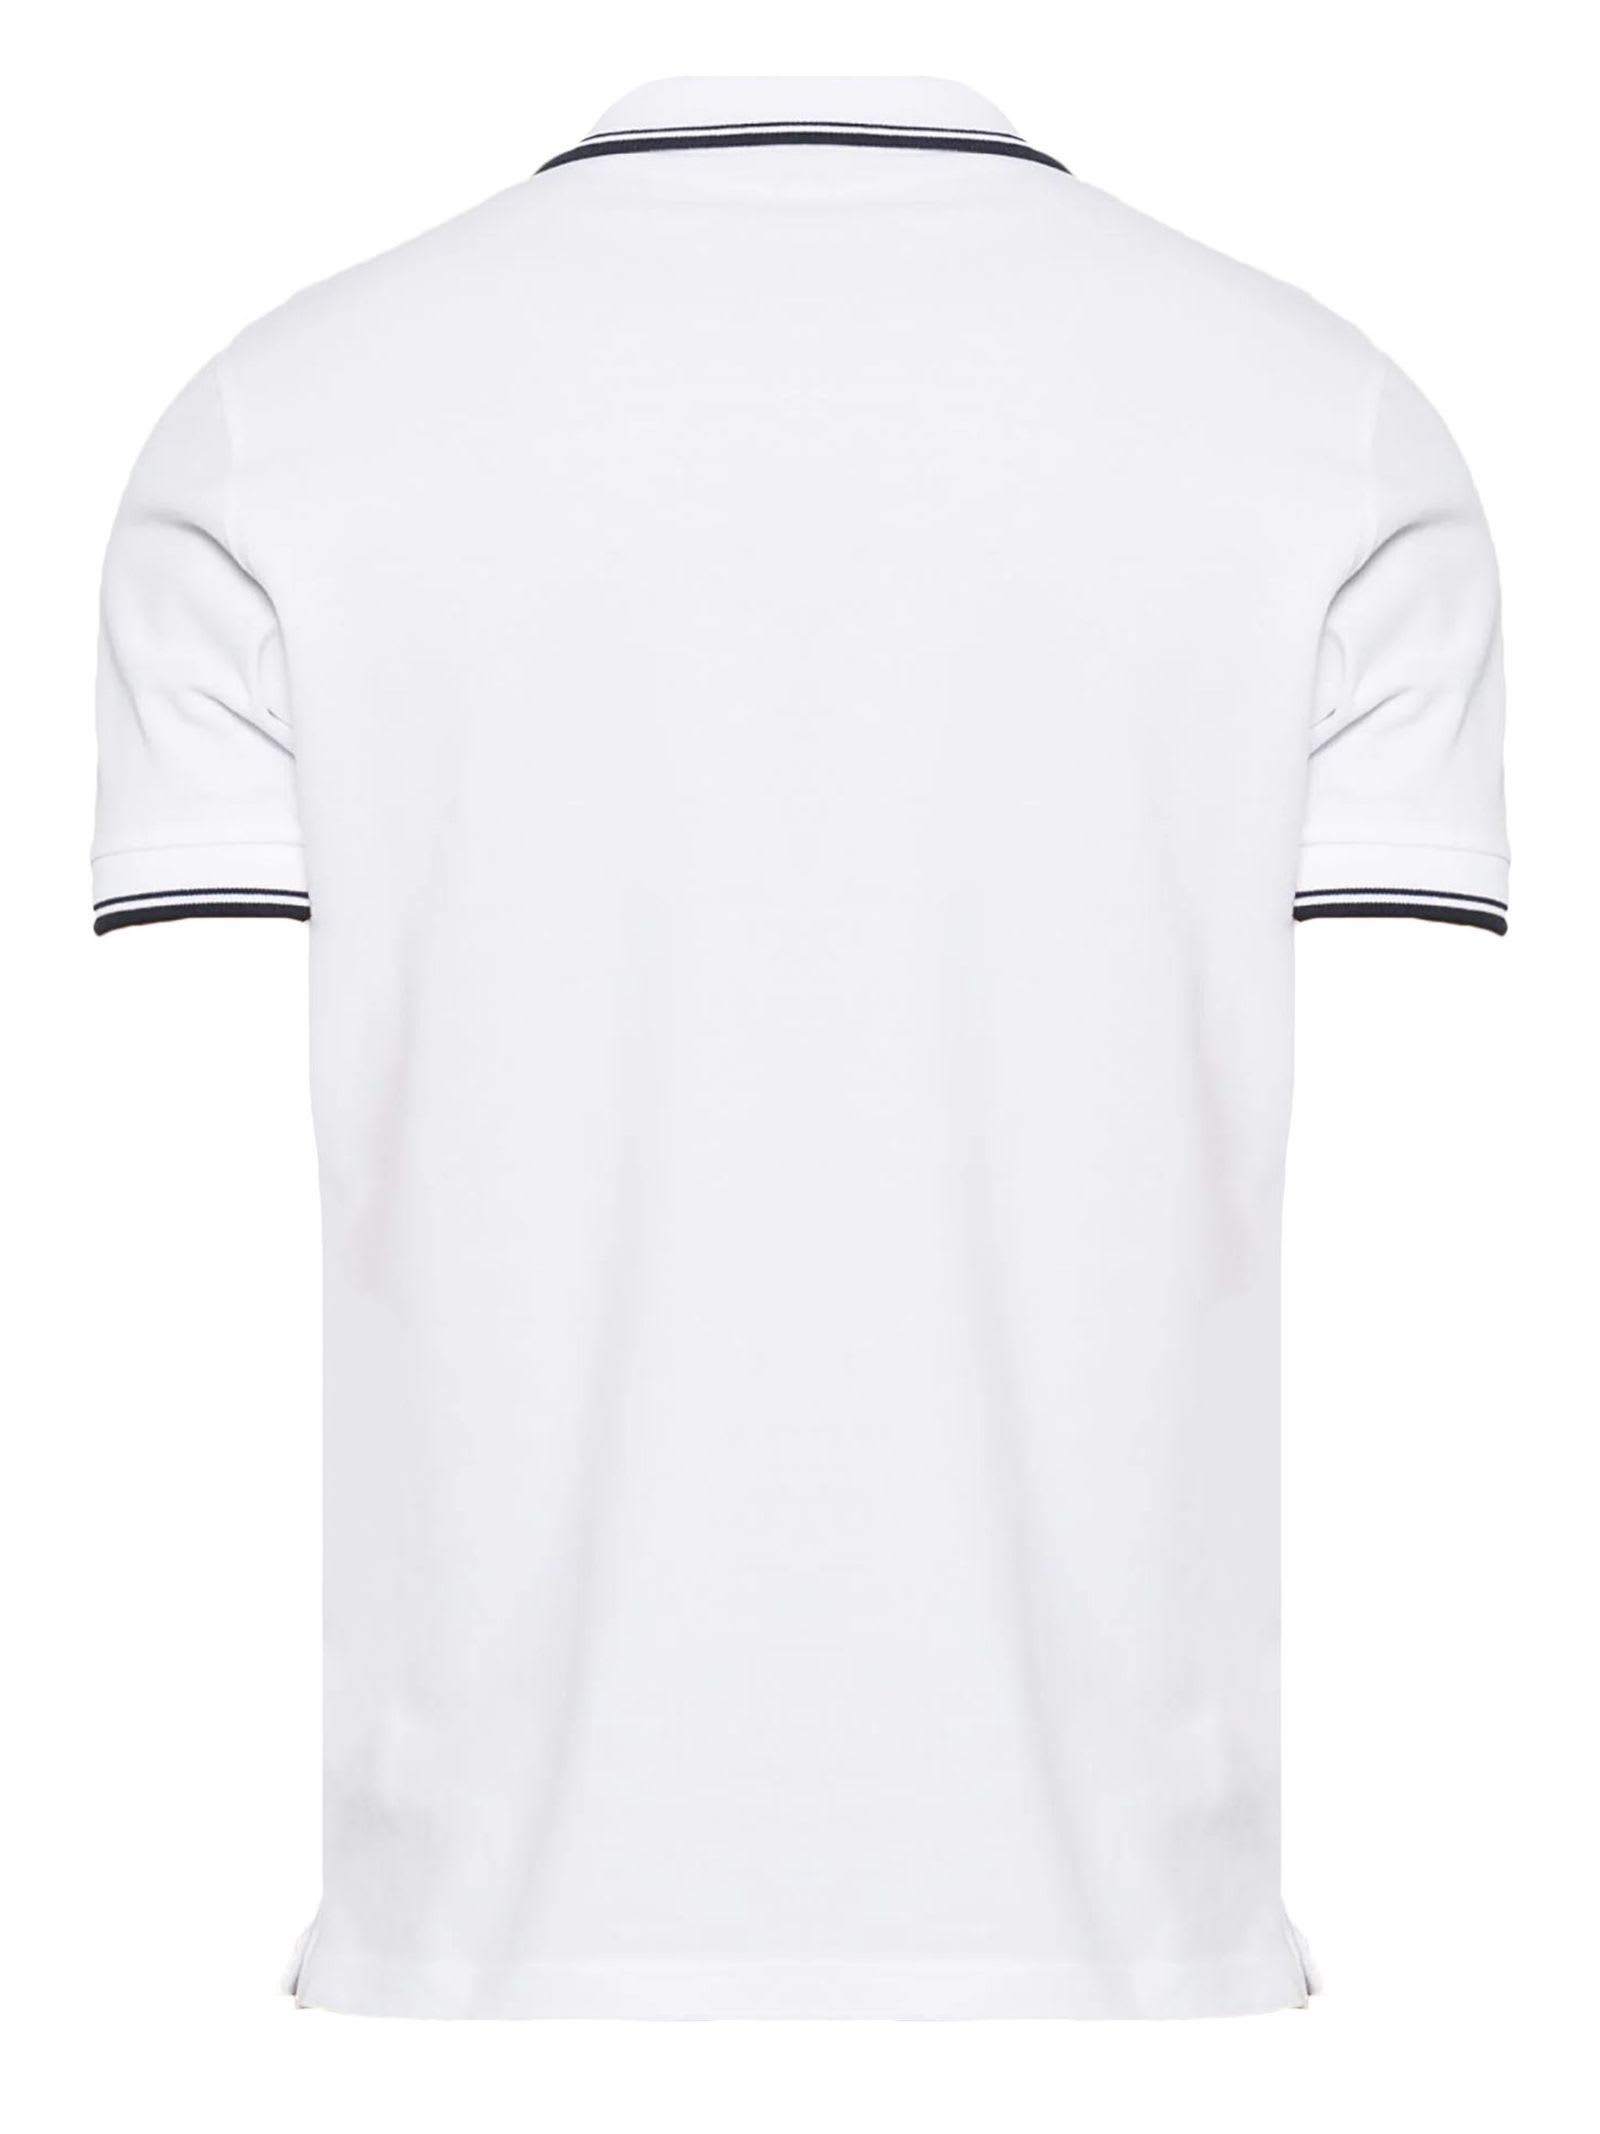 Shop Fay White Cotton Polo Shirt